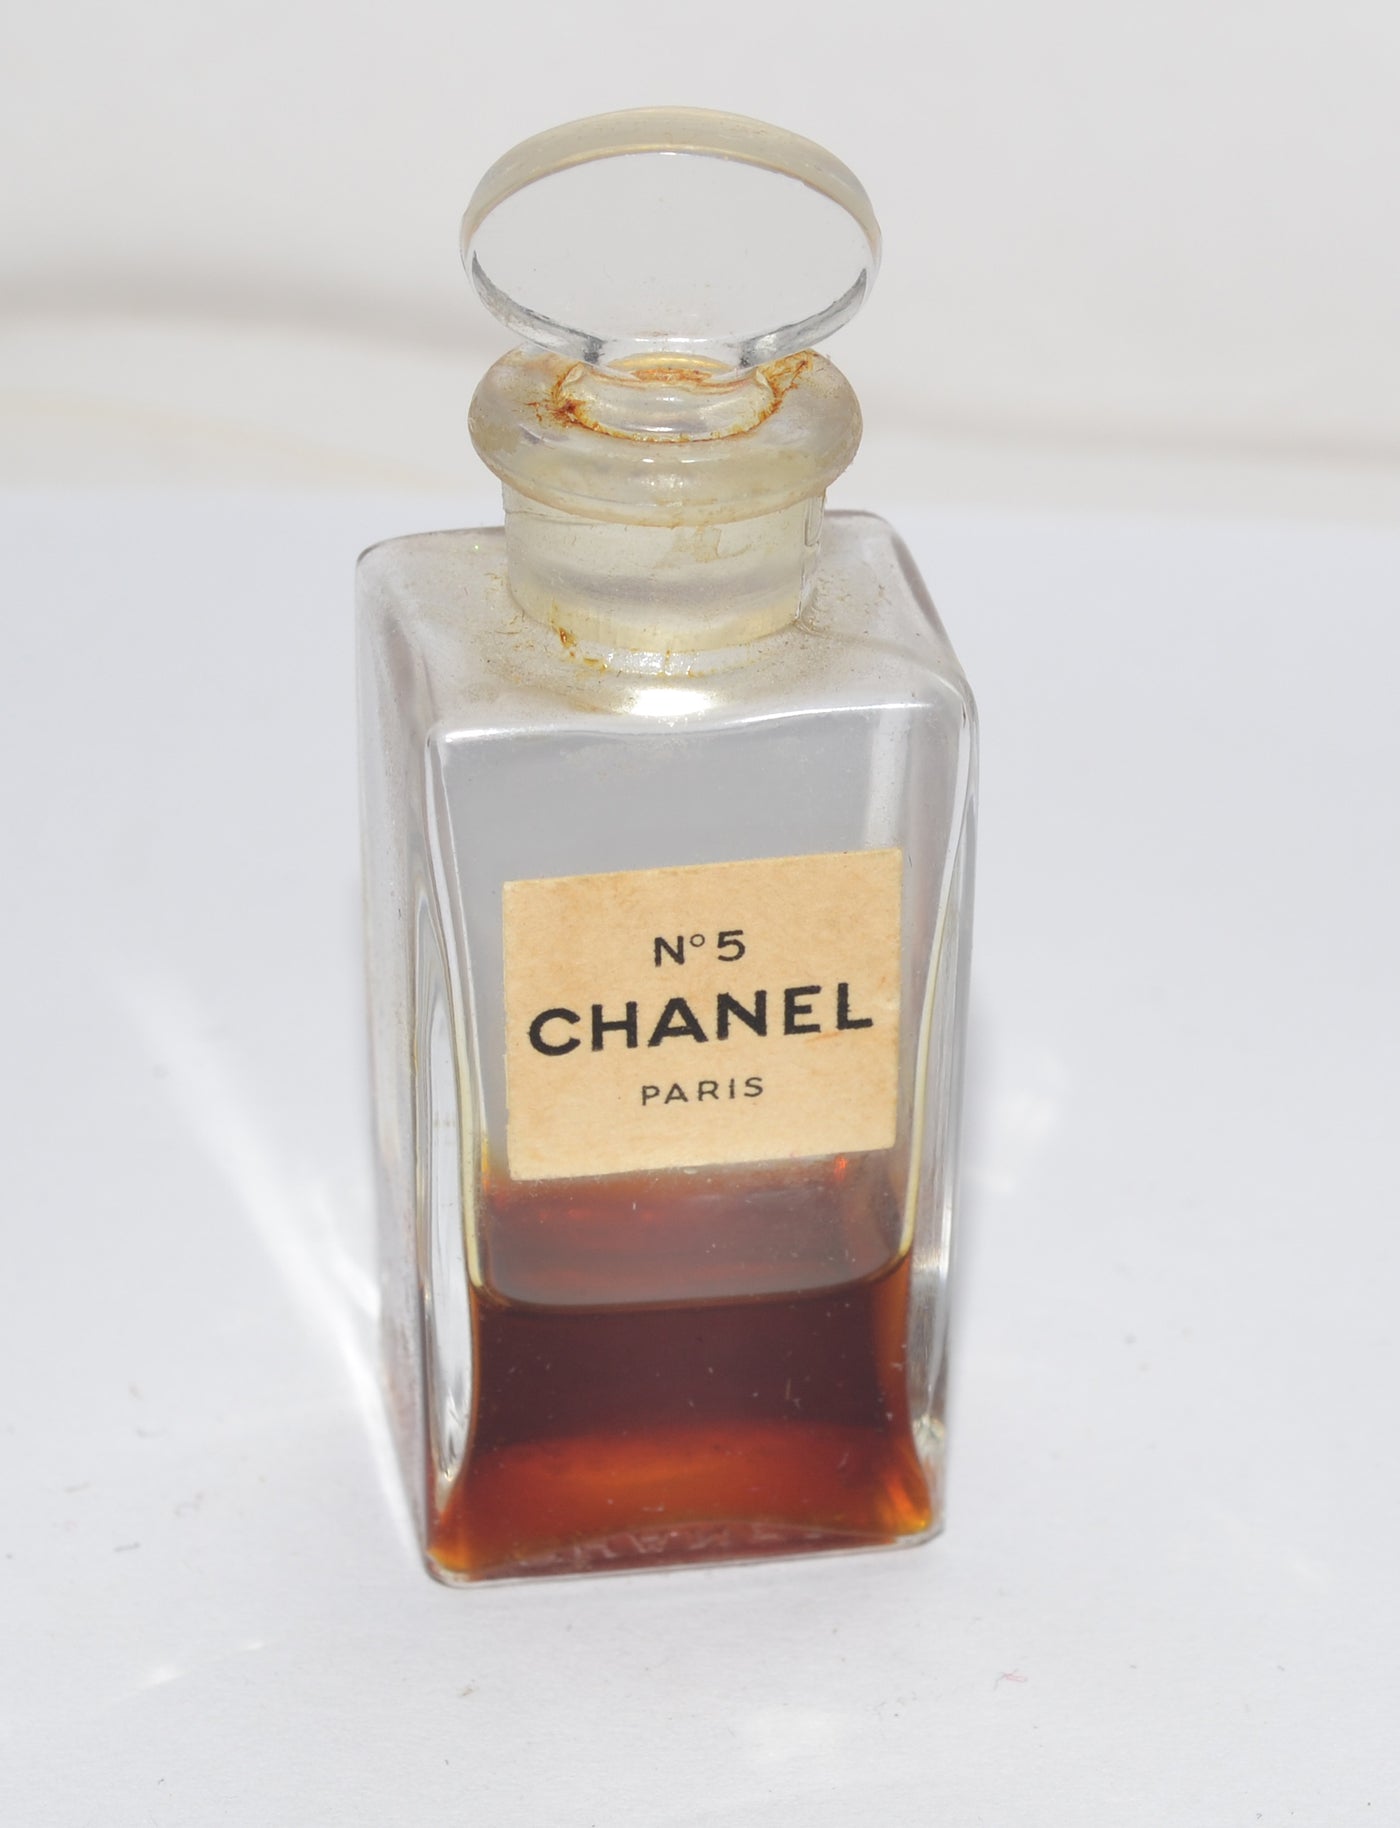 Chanel No 5 Perfume Tester Bottle